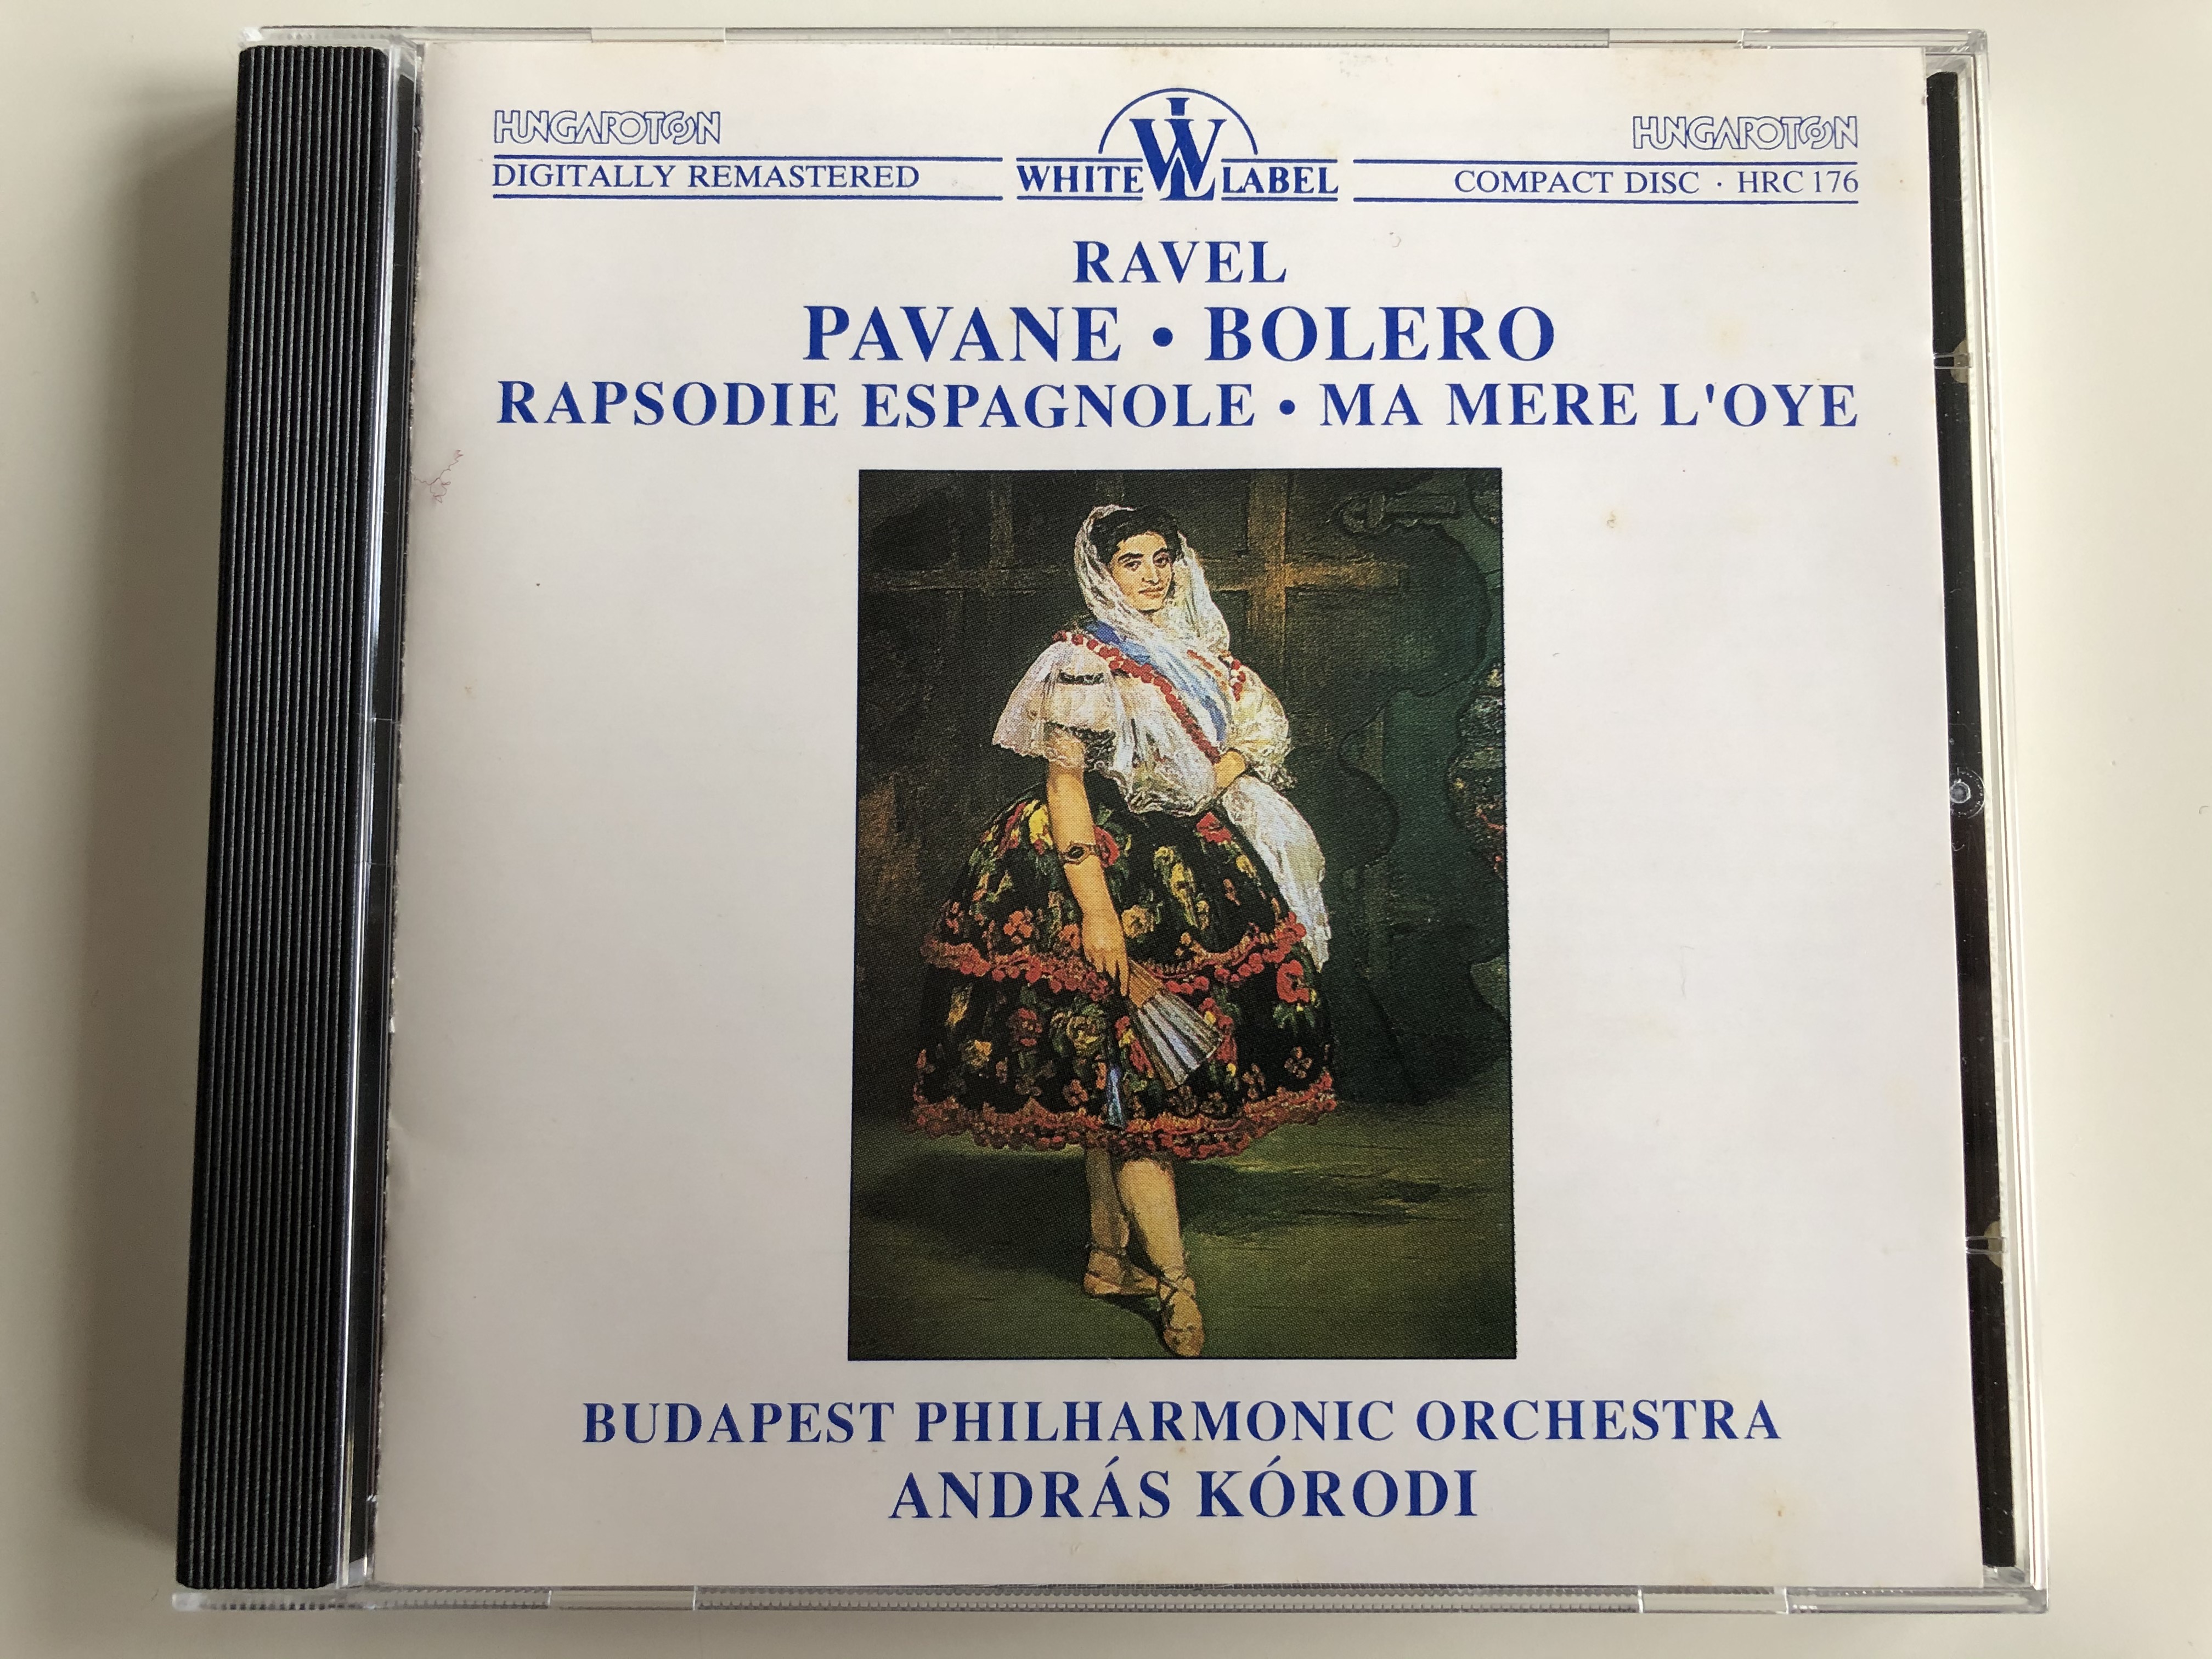 ravel-pavane-bolero-rhapsodie-espagnole-ma-mere-l-oye-budapest-philharmonic-orchstra-andr-s-k-rodi-white-label-audio-cd-1972-stereo-hrc-176-1-.jpg